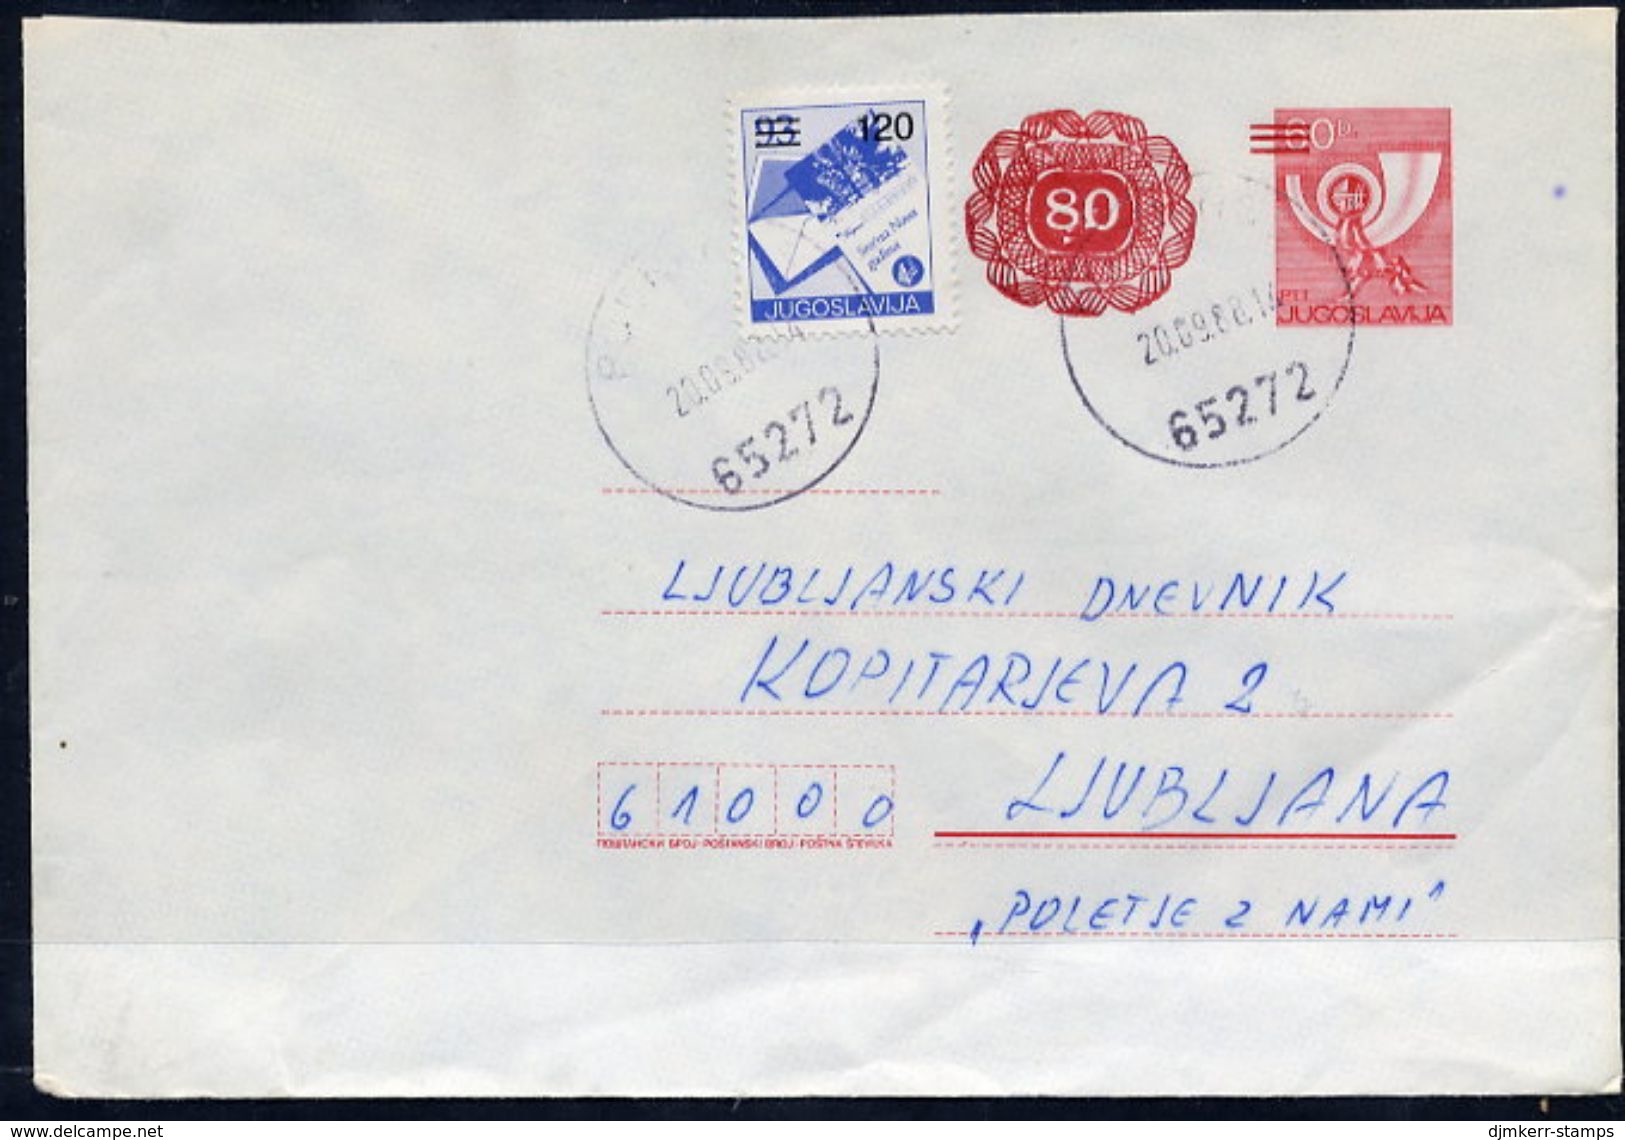 YUGOSLAVIA 1987 Posthorn 80/60 D.stationery Envelope  Used With Additional Franking.  Michel U78 - Ganzsachen